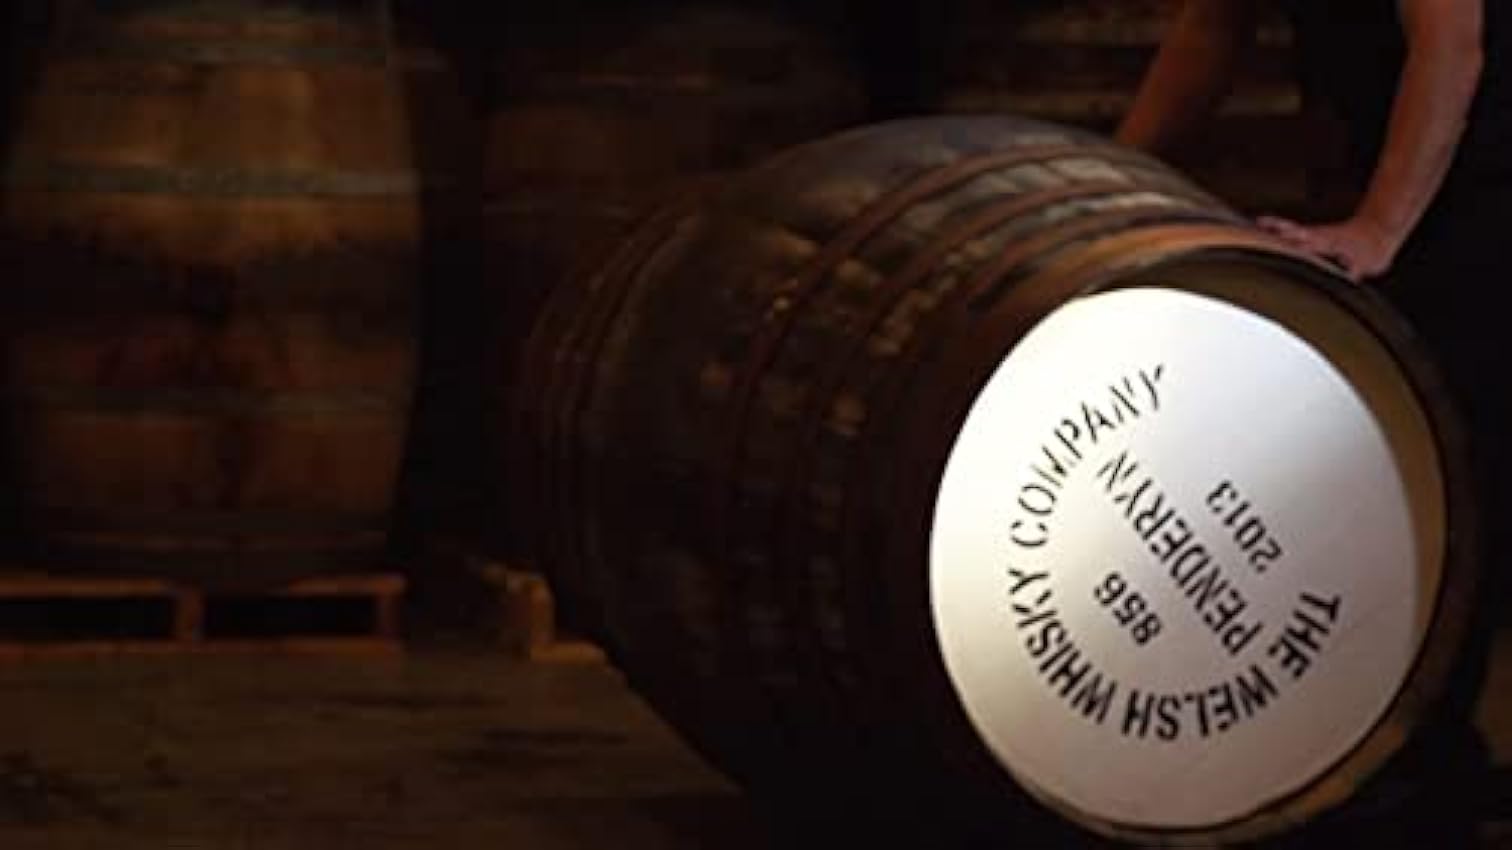 PENDERYN - Myth - Whisky Single Malt - 41% Alcool - Origine : Pays de Galles/Southern Wales - Bouteille 50 cl NknO02et